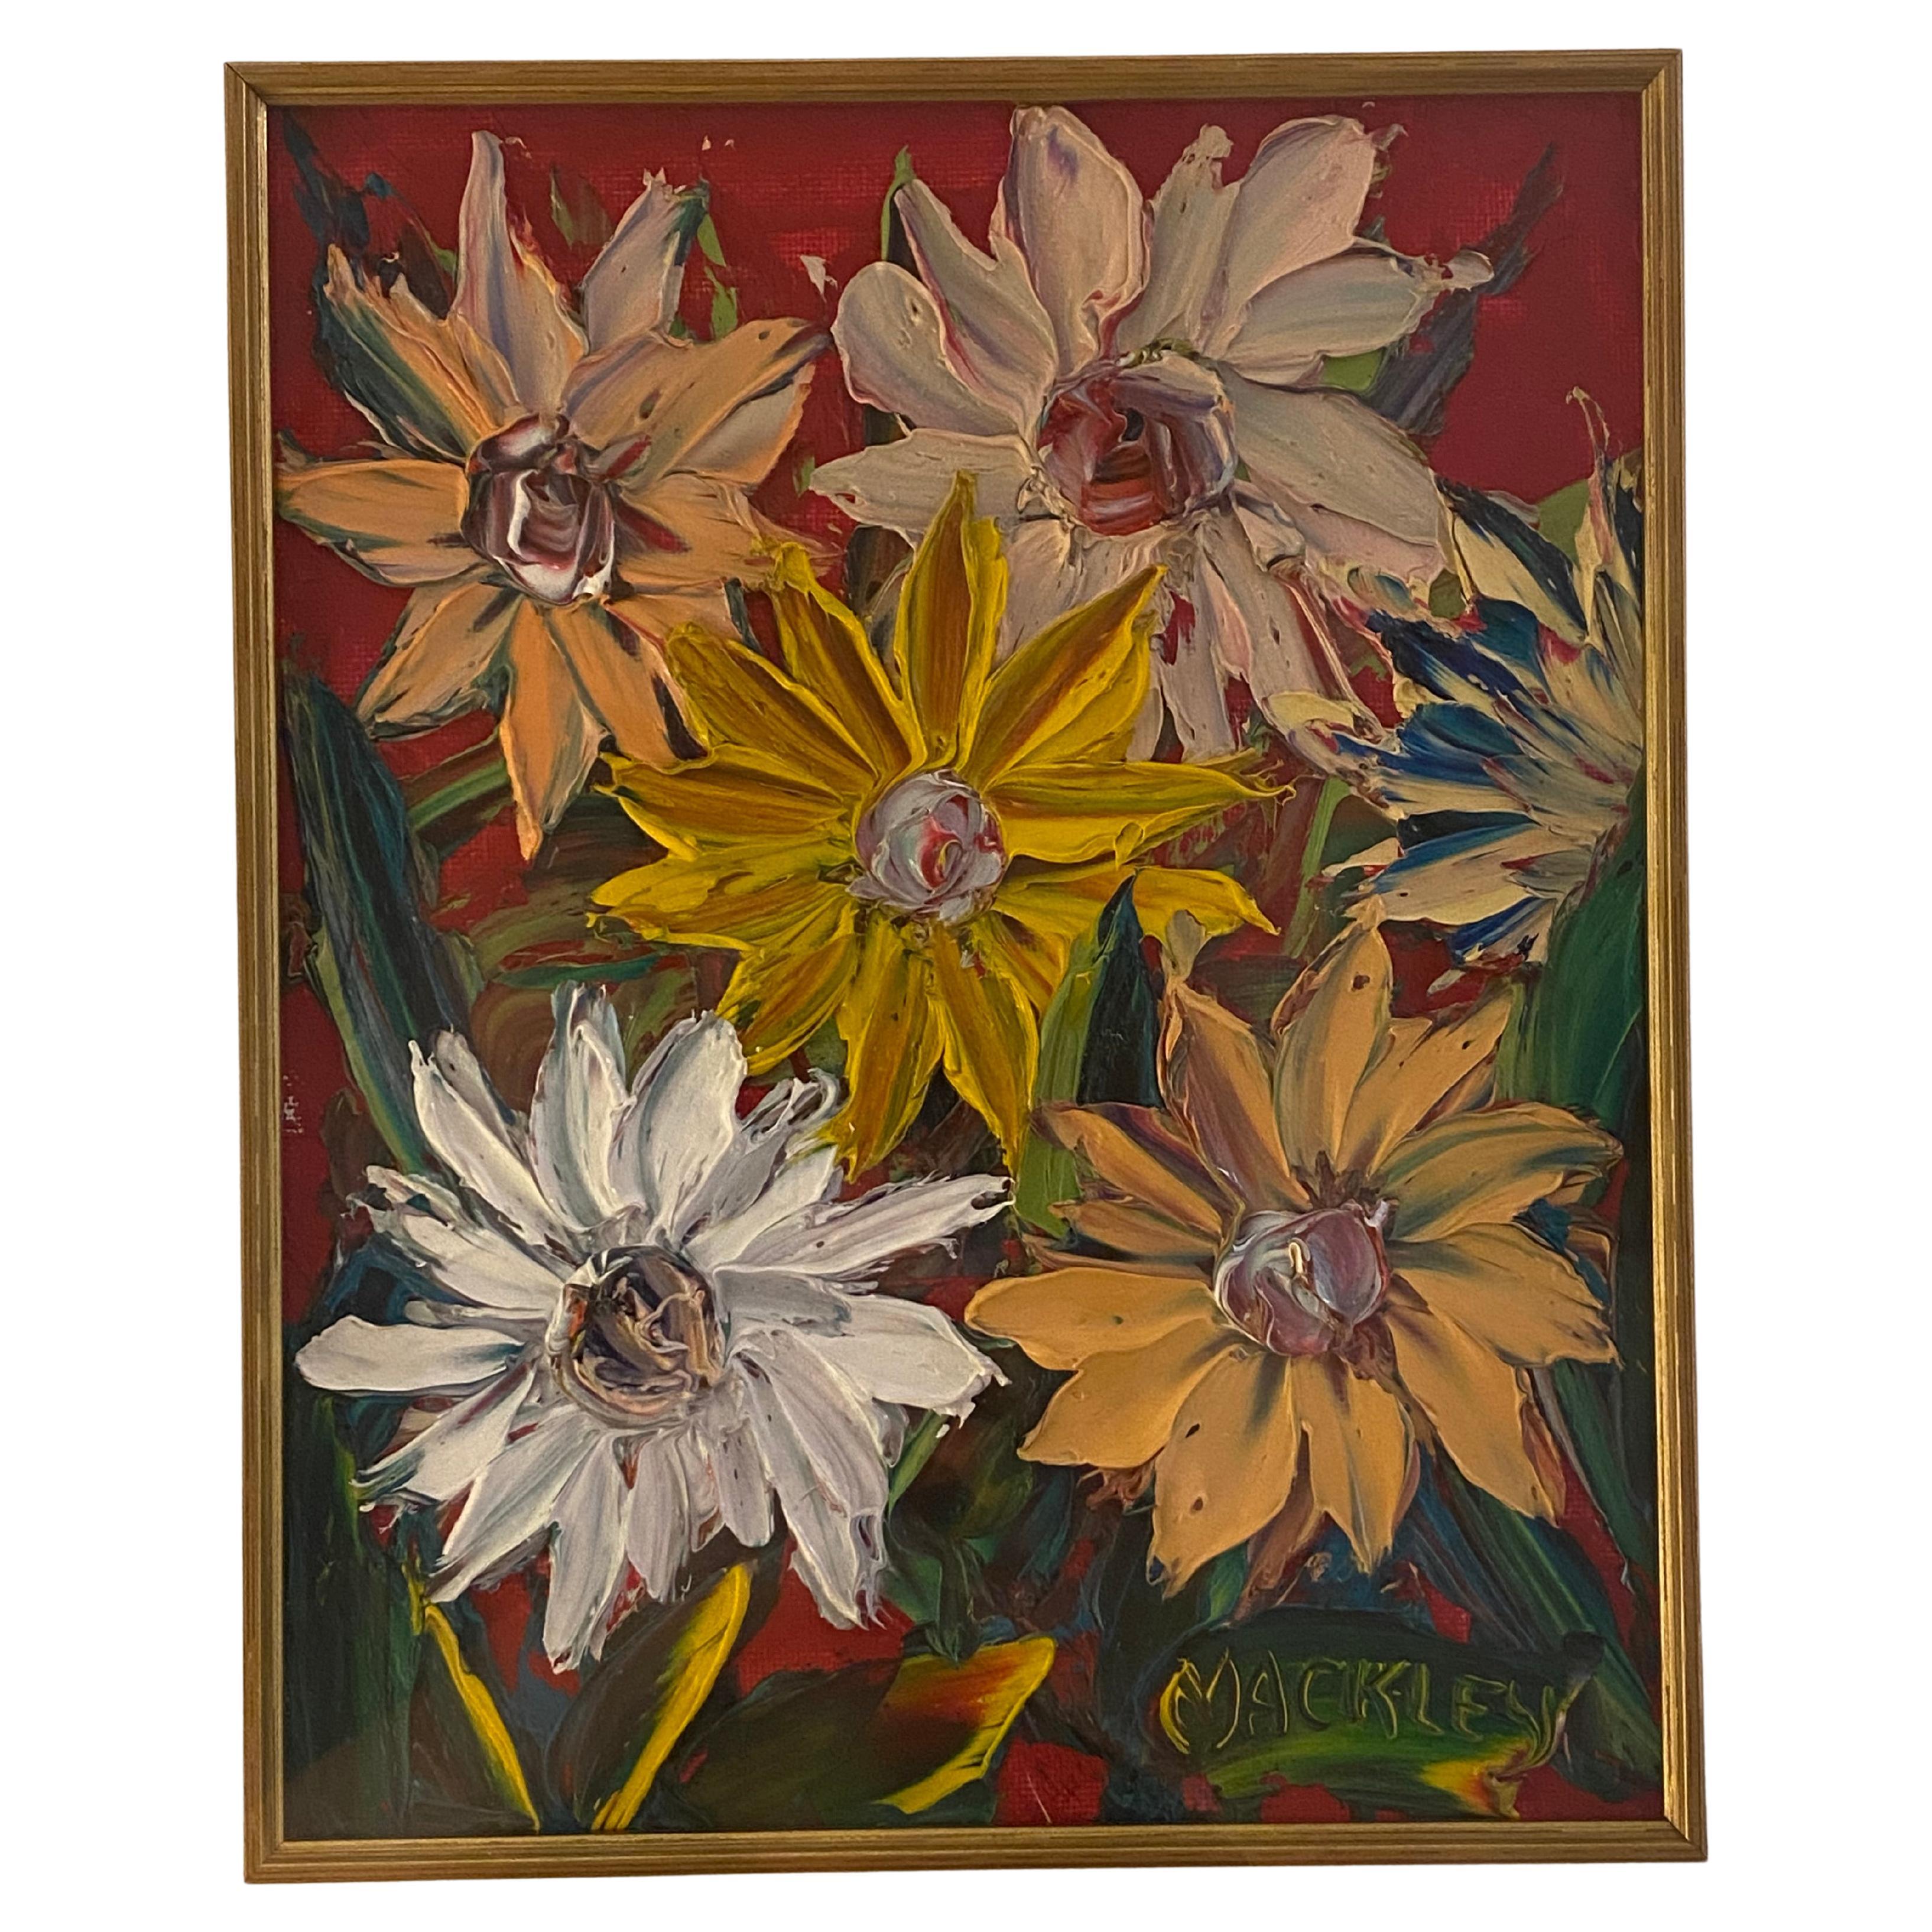 Evan Mackley Oil On Board Flowers Painting. Framed. For Sale